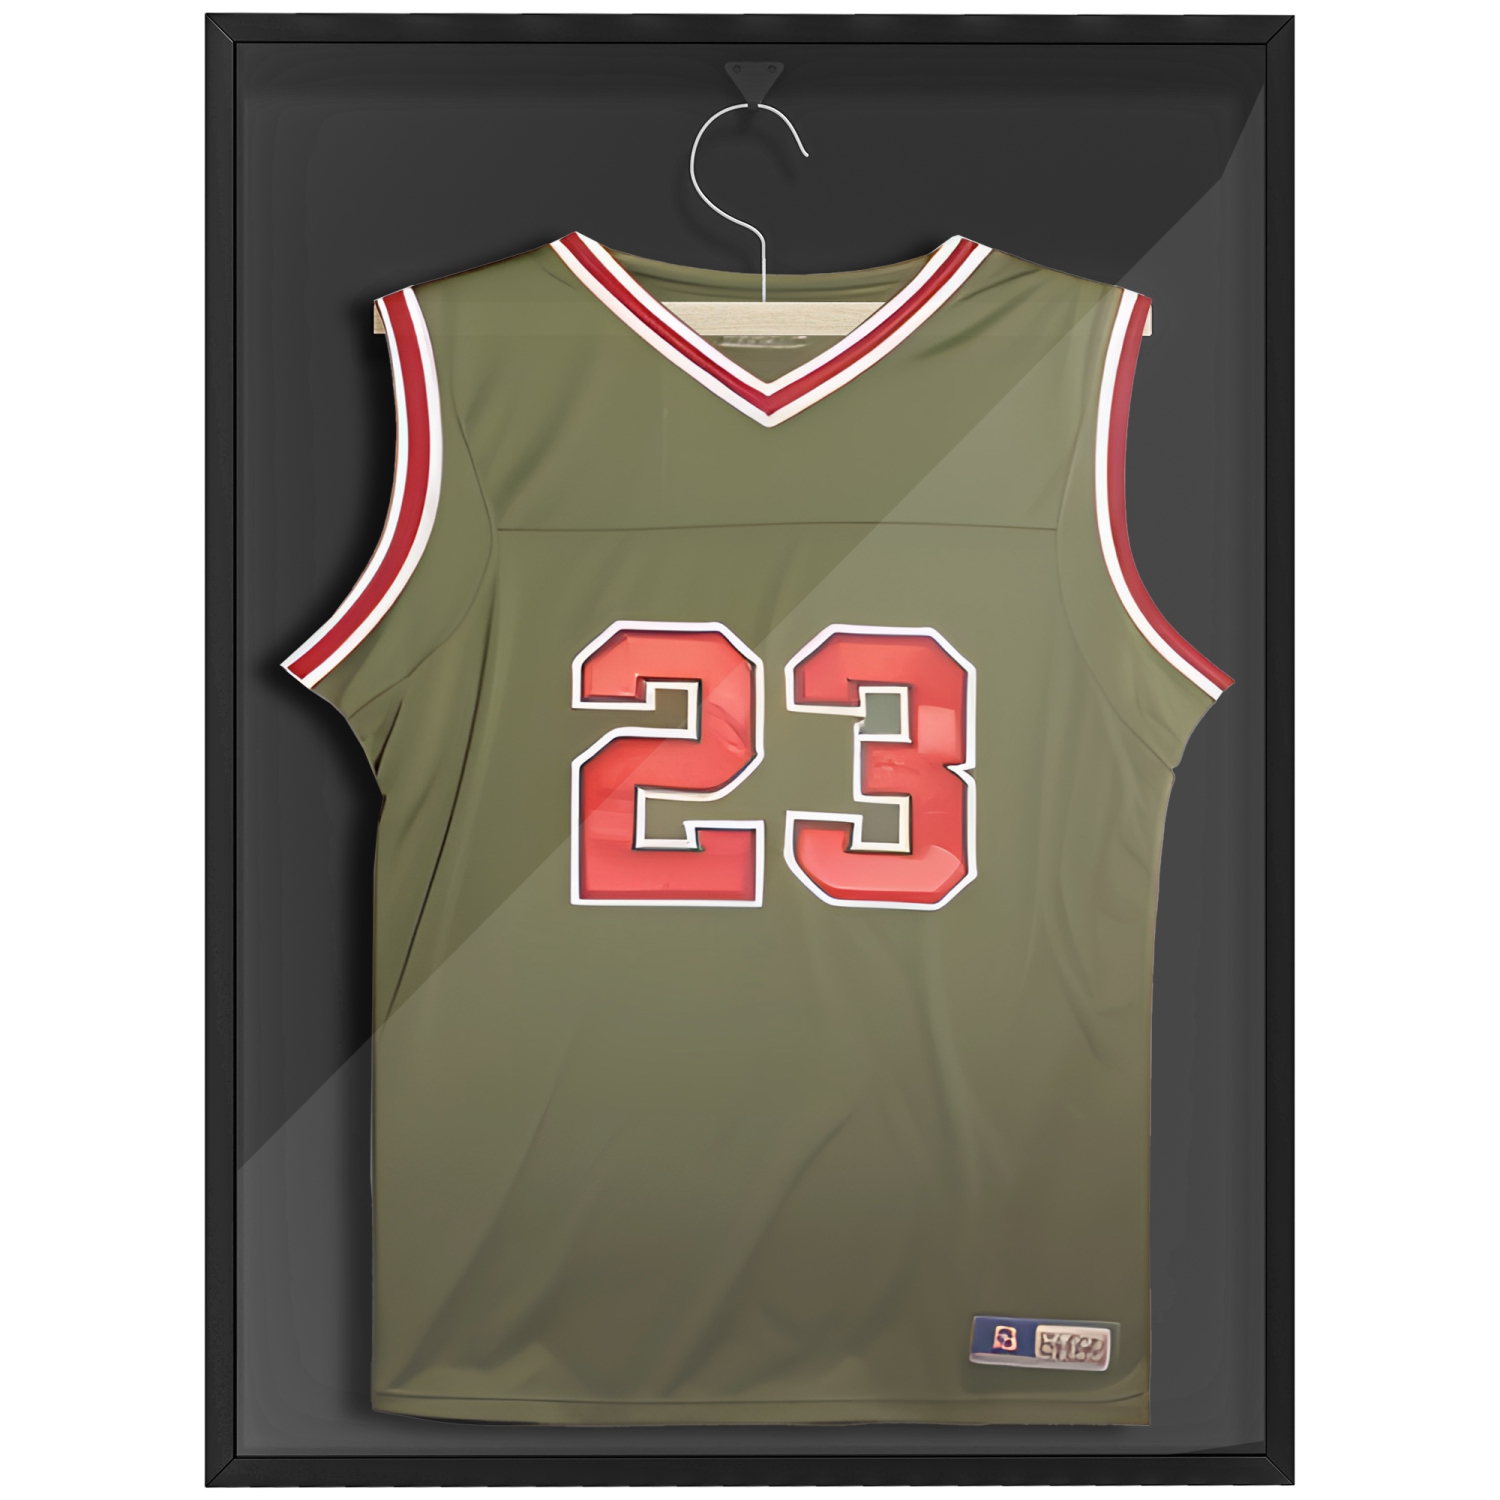 HOMCOM Jersey Display Case, Metal Jersey Frame with UV Protection, Aluminium Sports Shirt Shadow Box with Acrylic Panel for Basketball Football Baseball, 23.6" x 31.5" (Black)